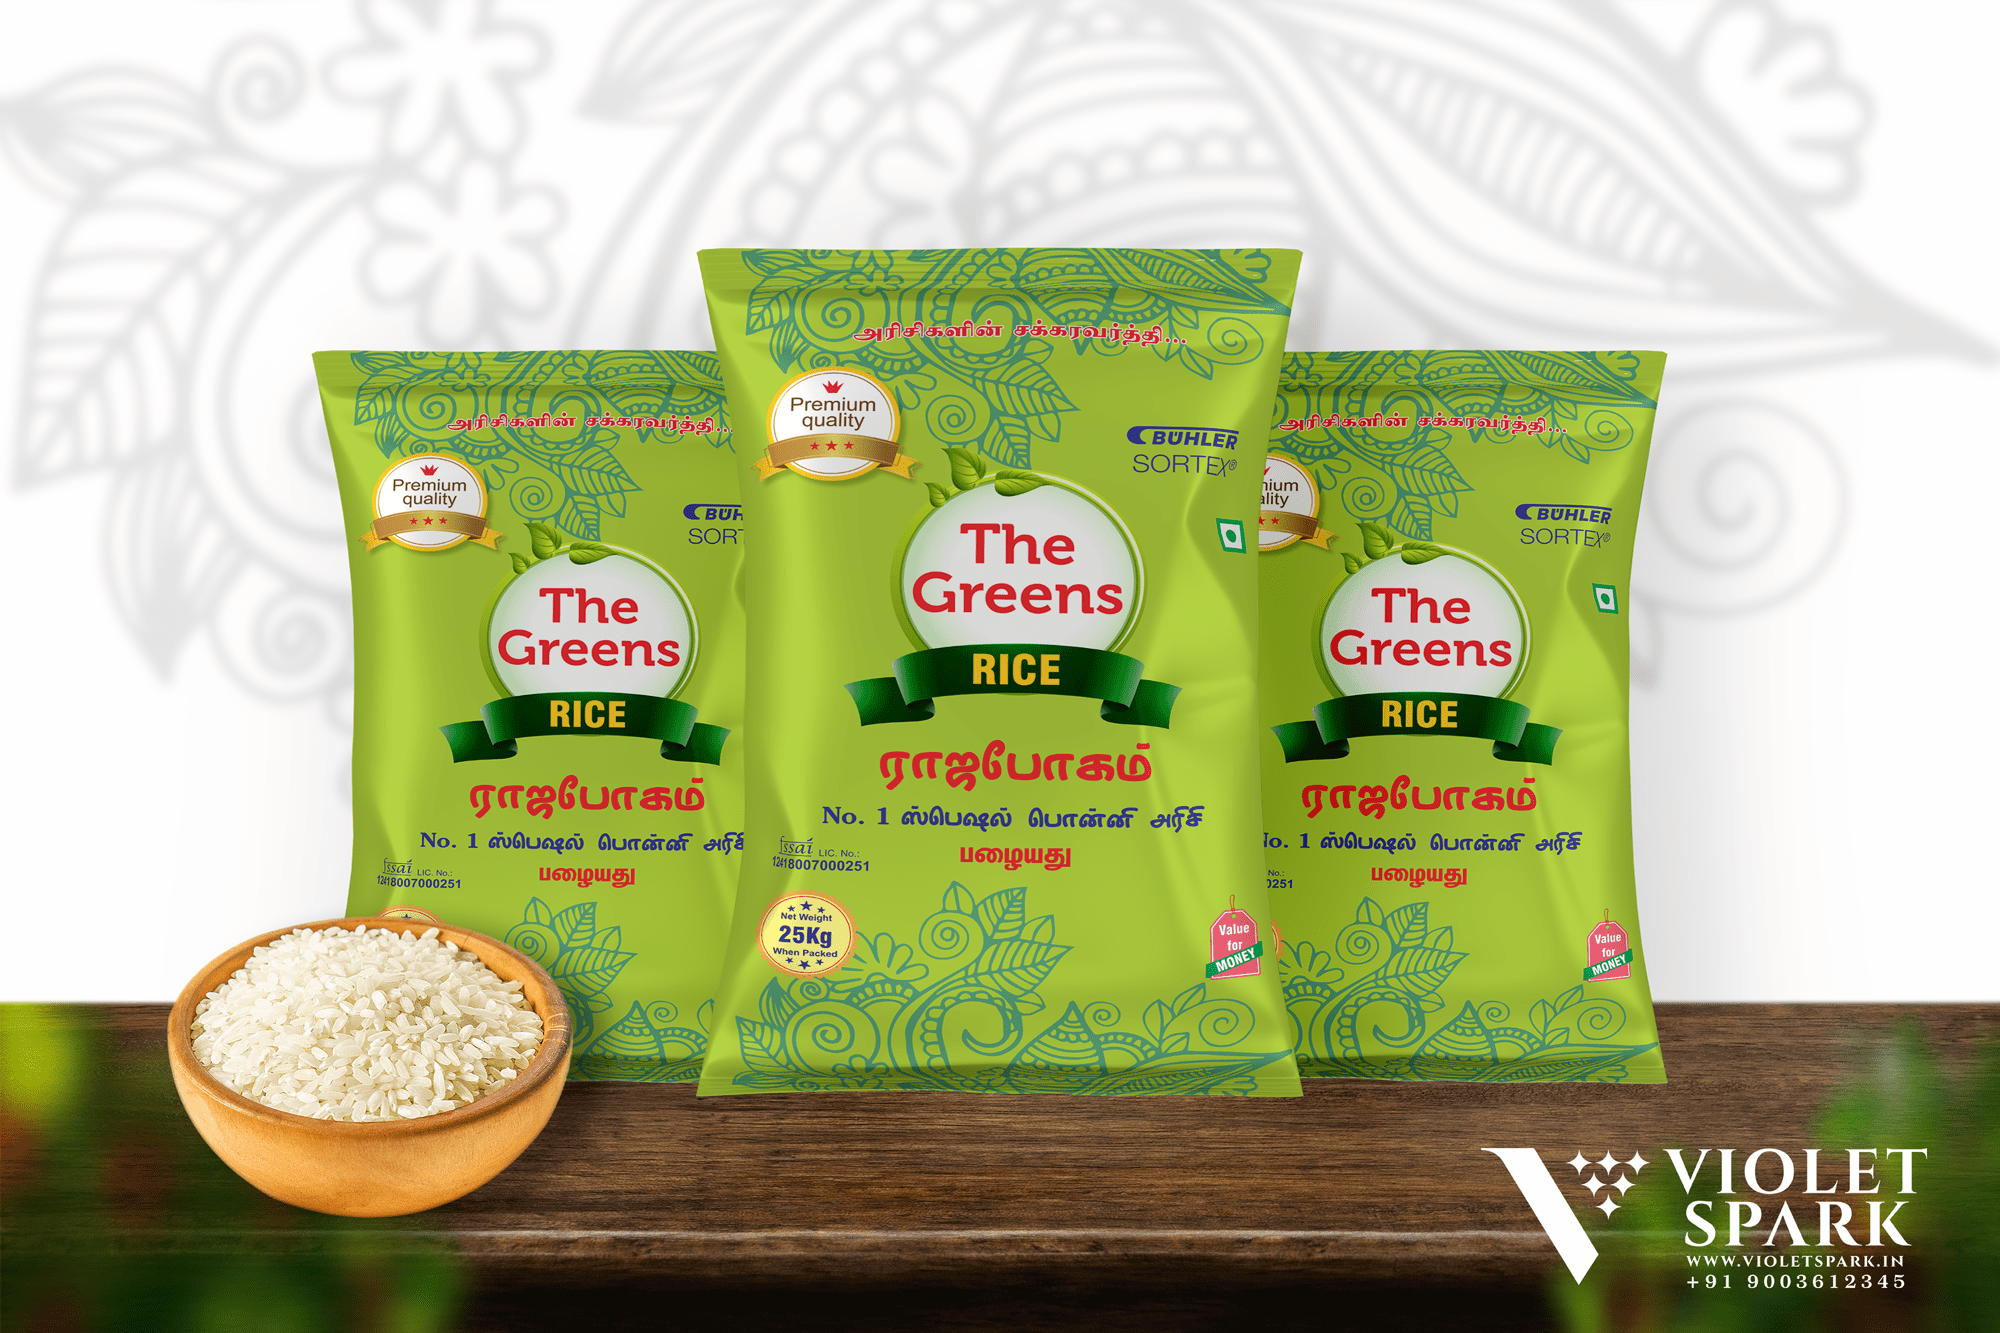 The Greens Brand Rajabhogam Rice Bags Branding & Packaging Design in Erode by Violet Spark